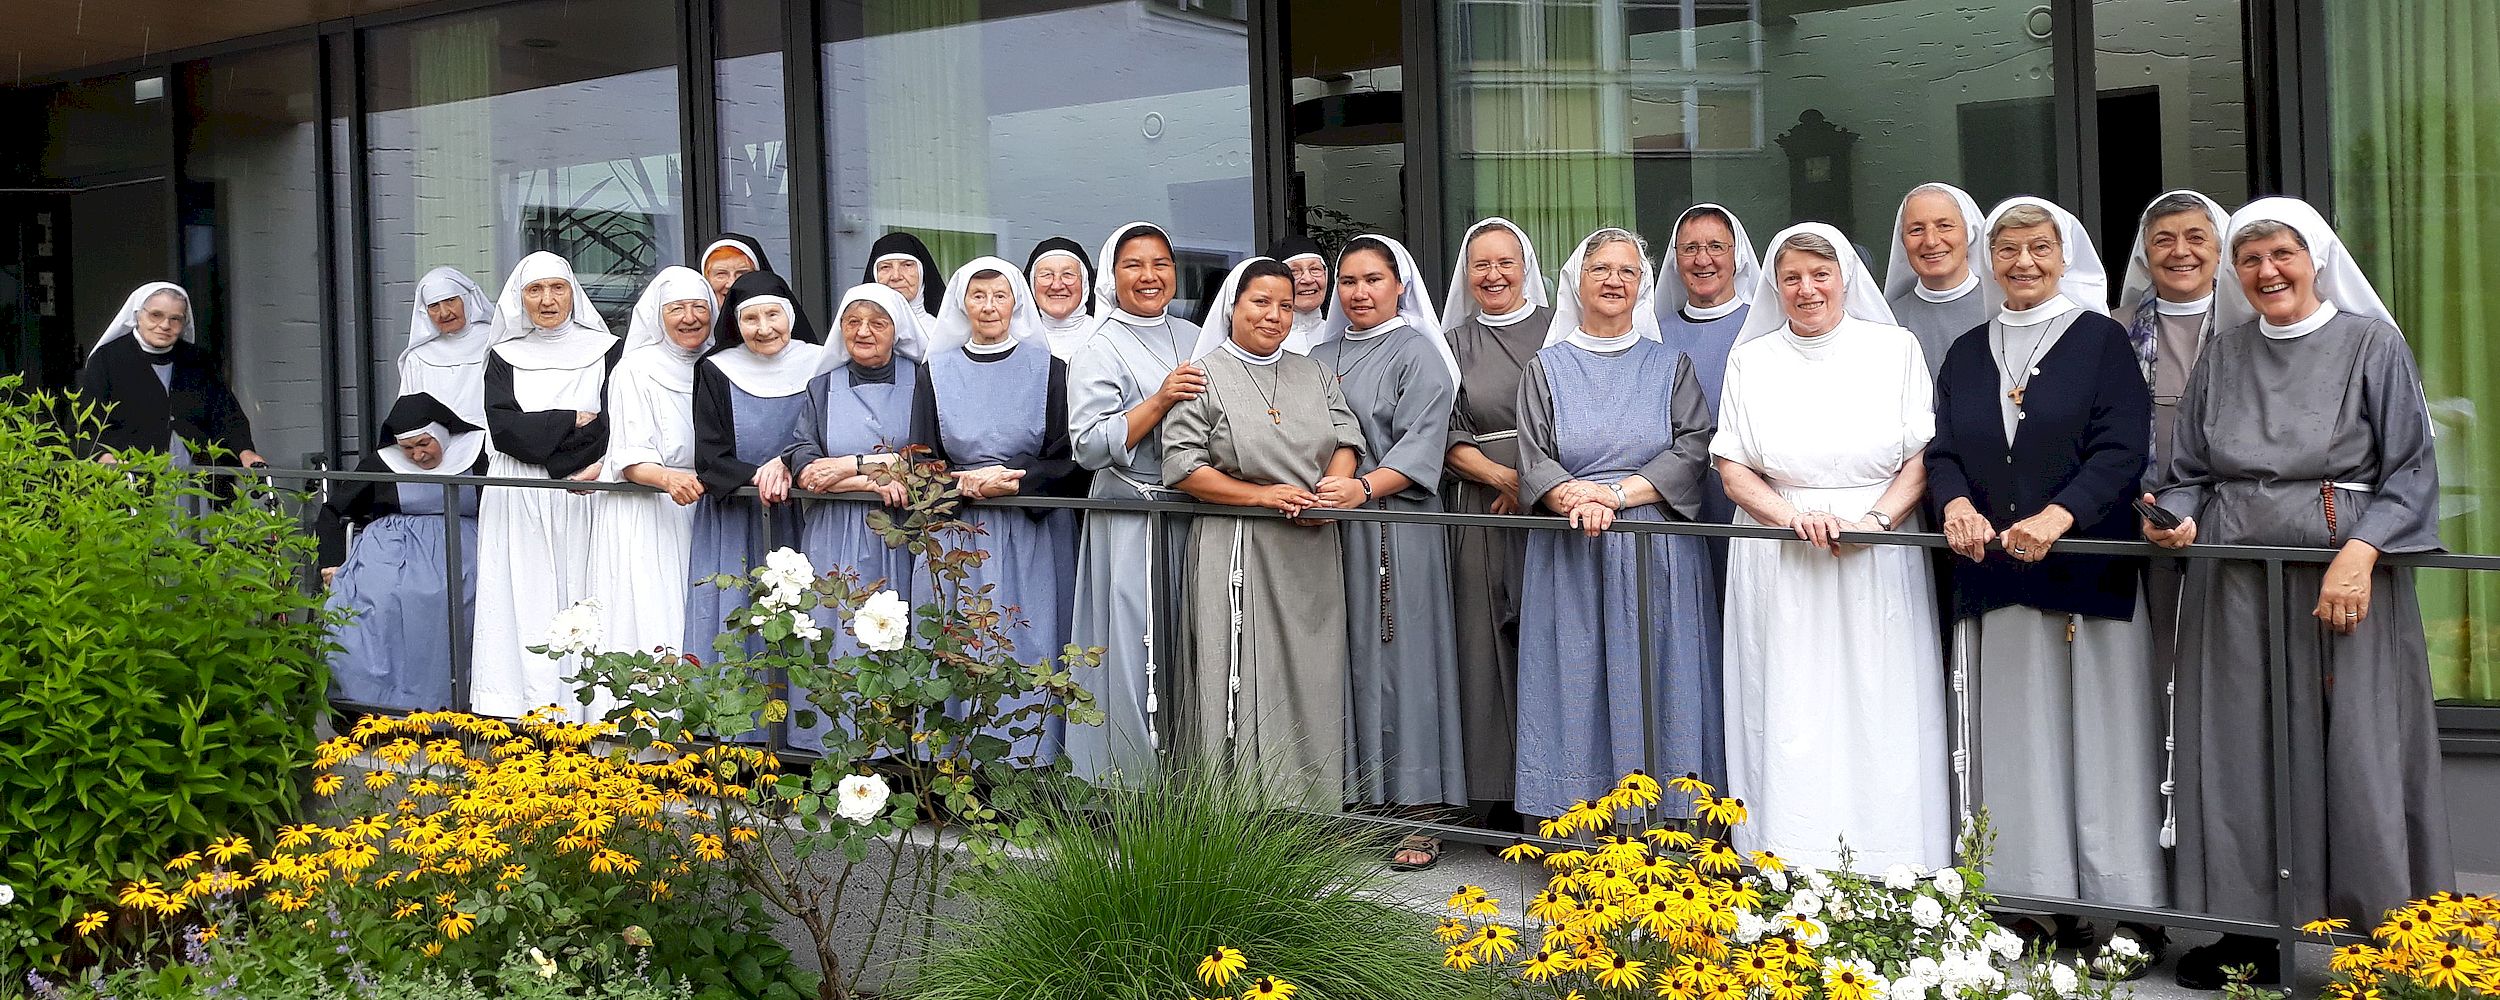 Franziskanerinnen Tertiarschwestern Hall in Tirol